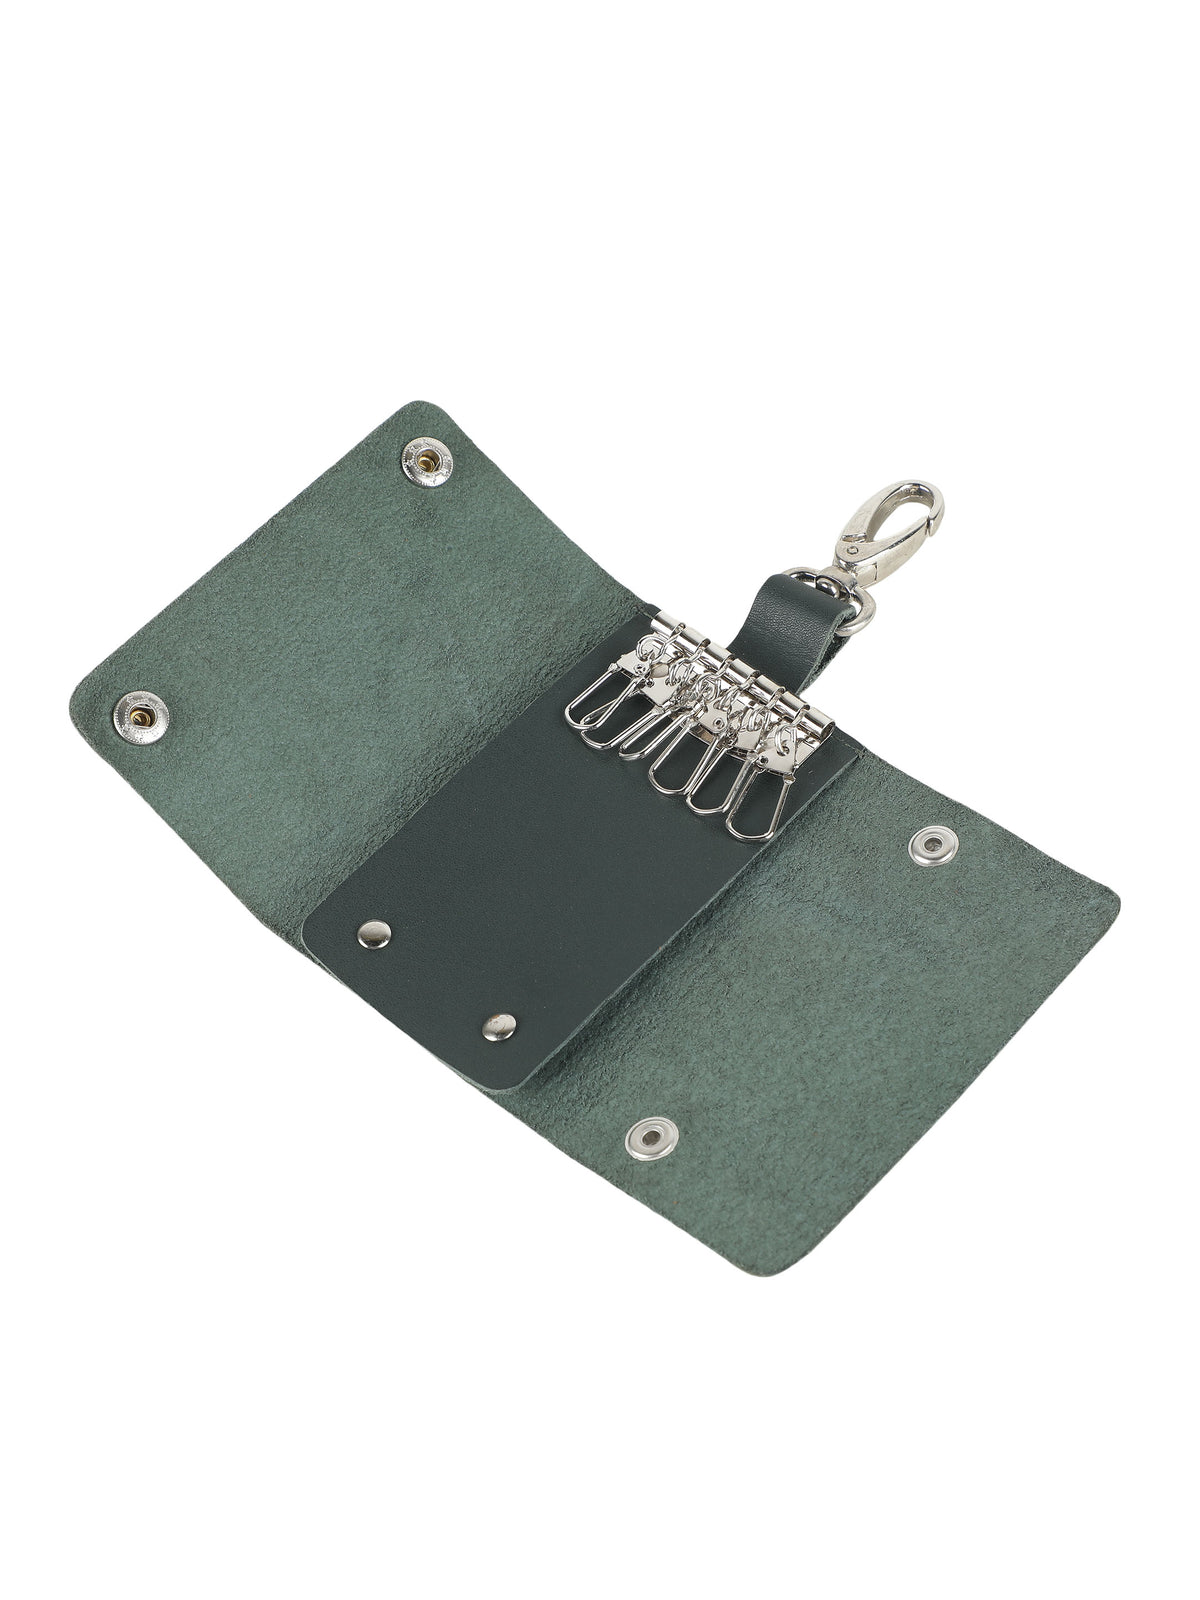 Genuine leather green key holder